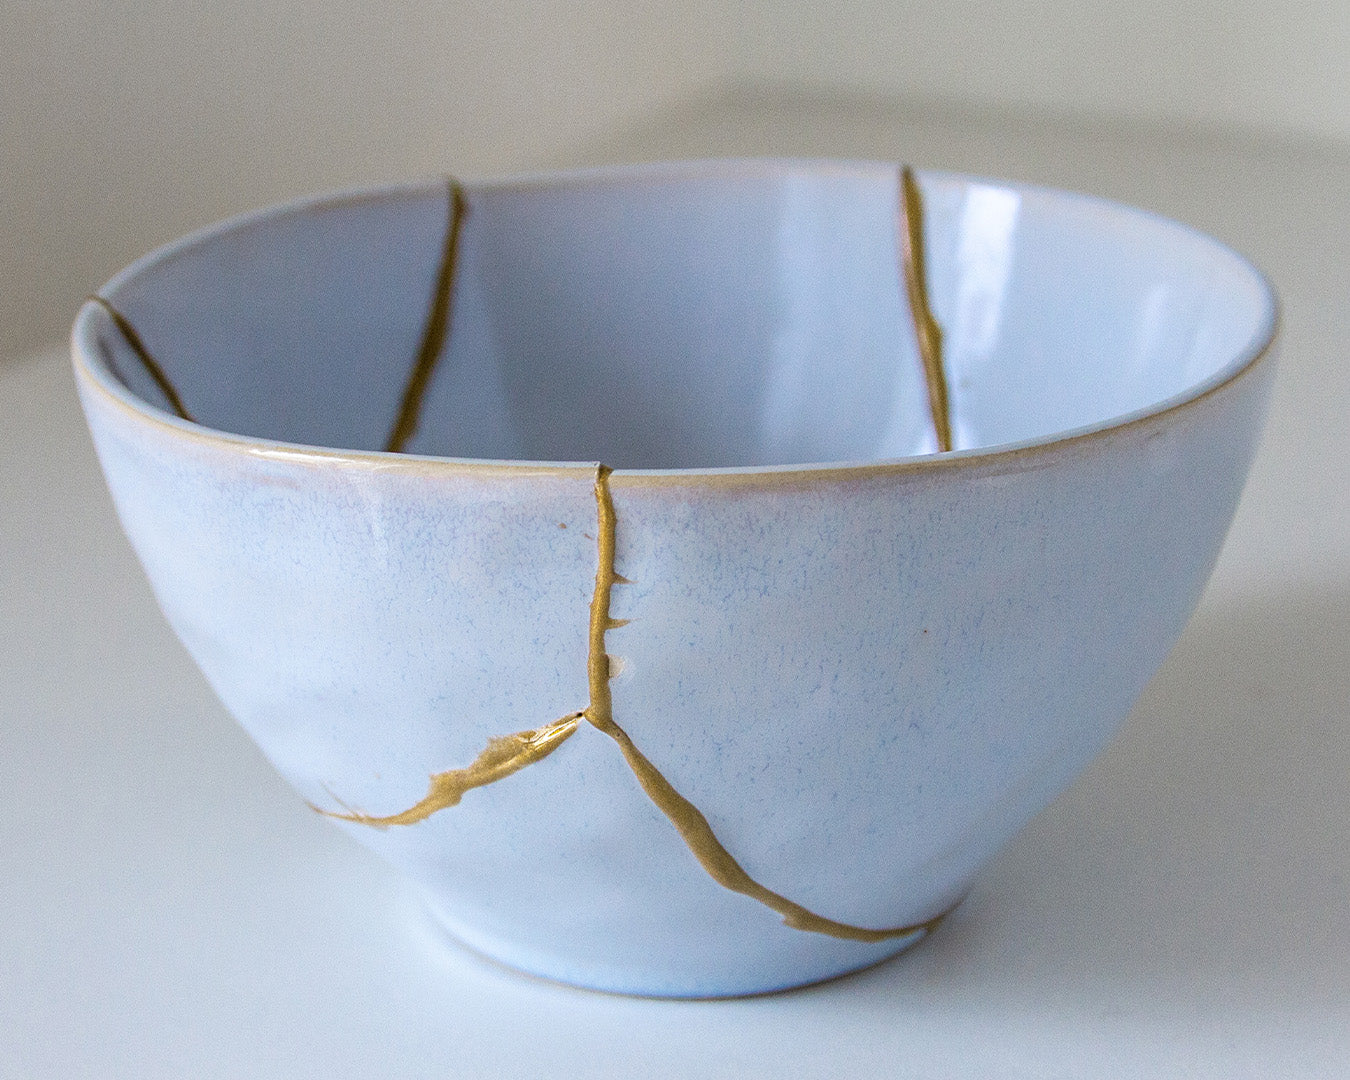 How to repair broken ceramics with Kintsugi